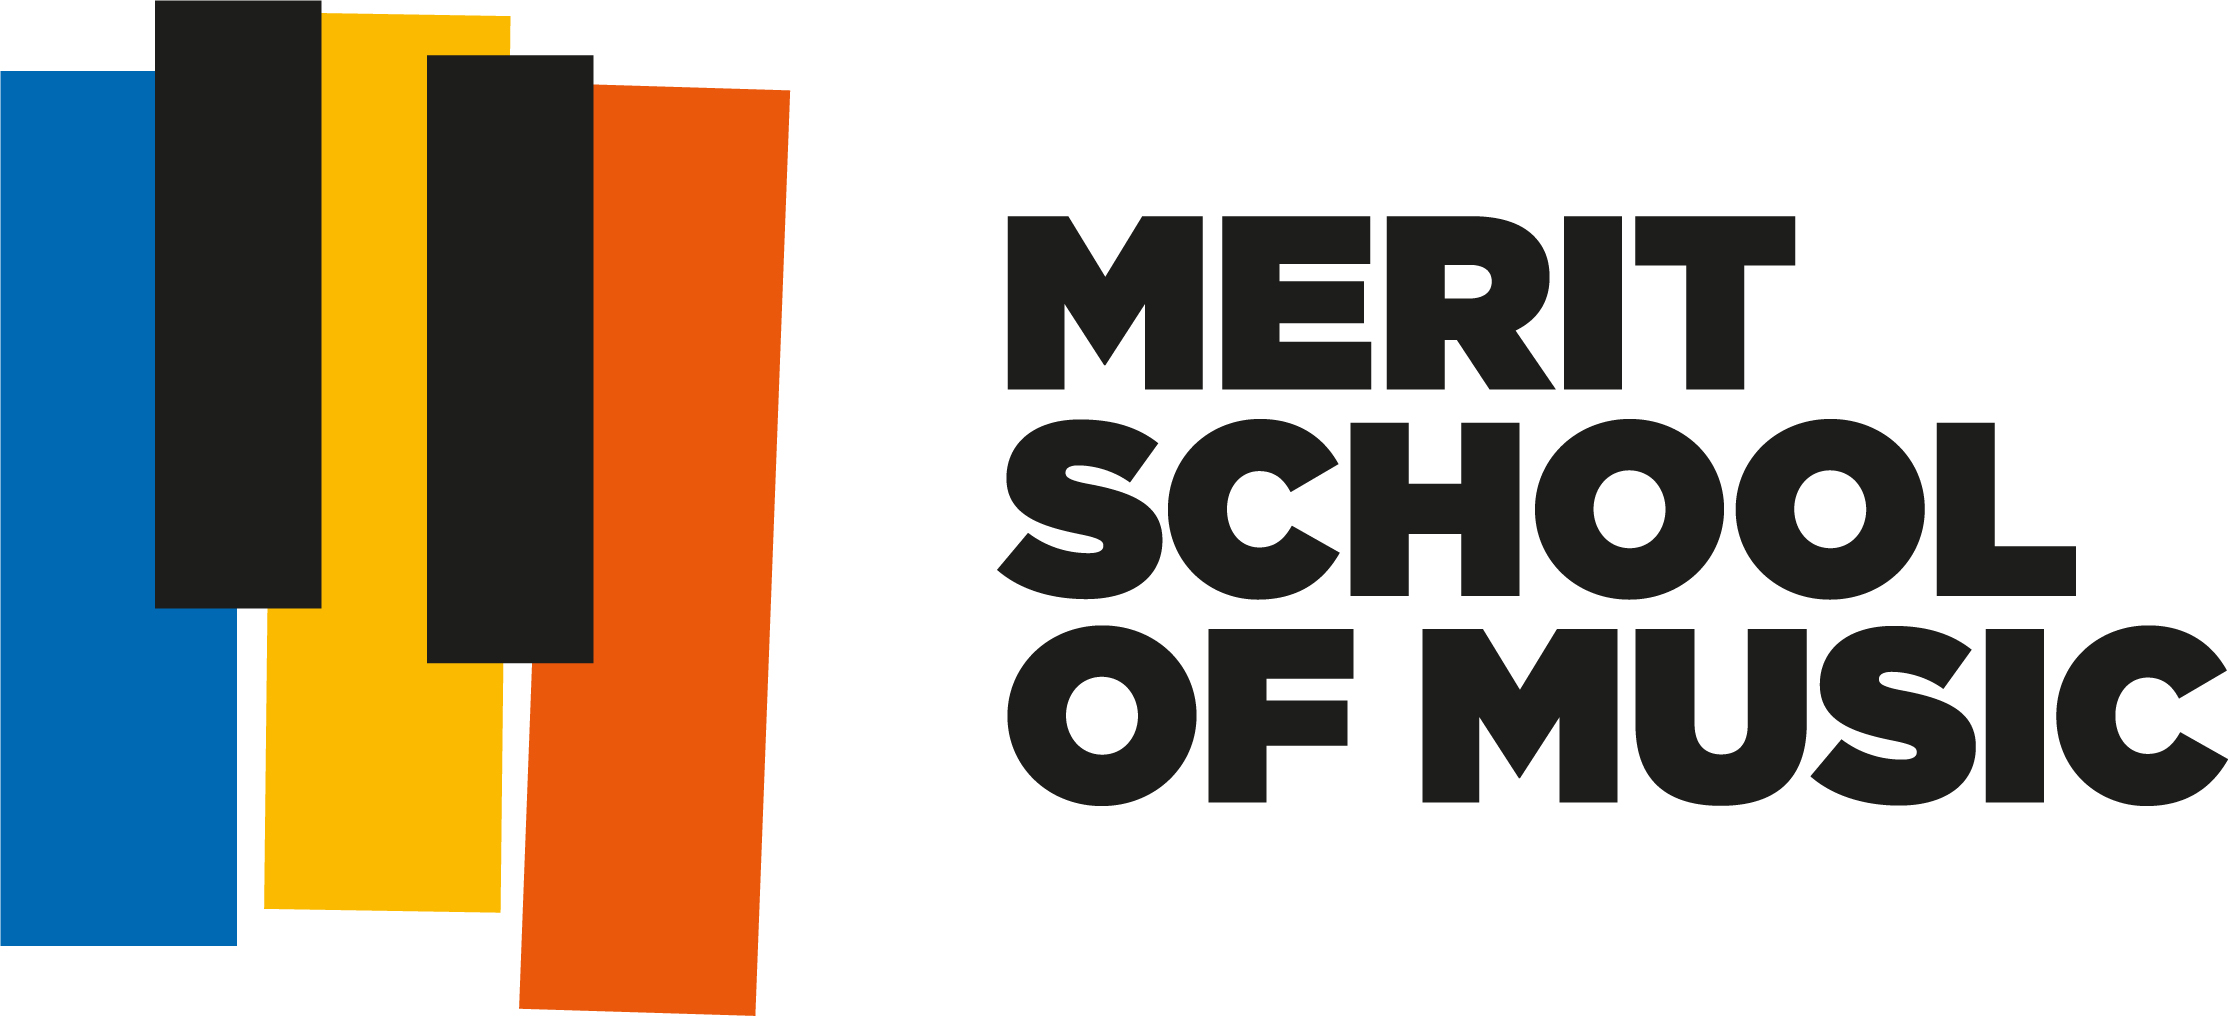 Image for Merit School of Music